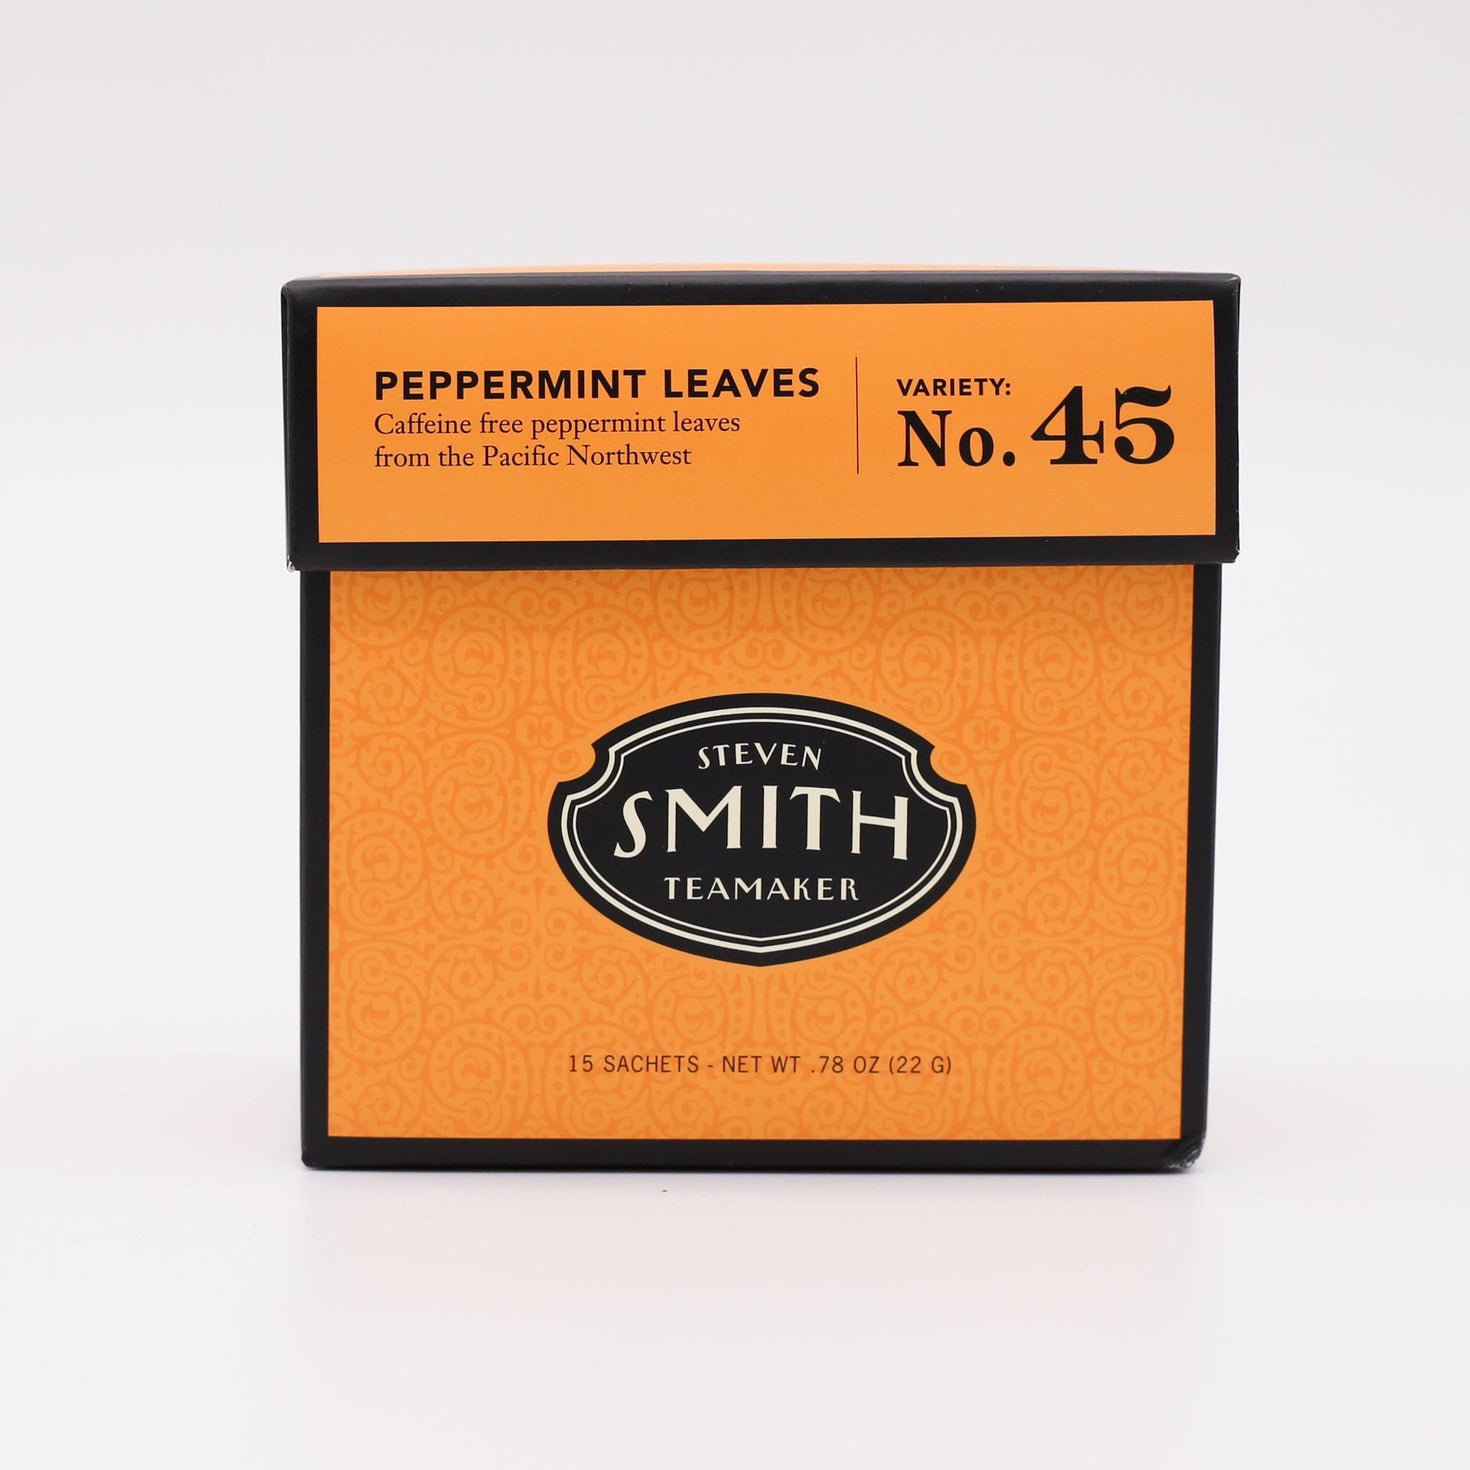 Smith Teamaker Boxed Tea: Peppermint Leaves .78oz